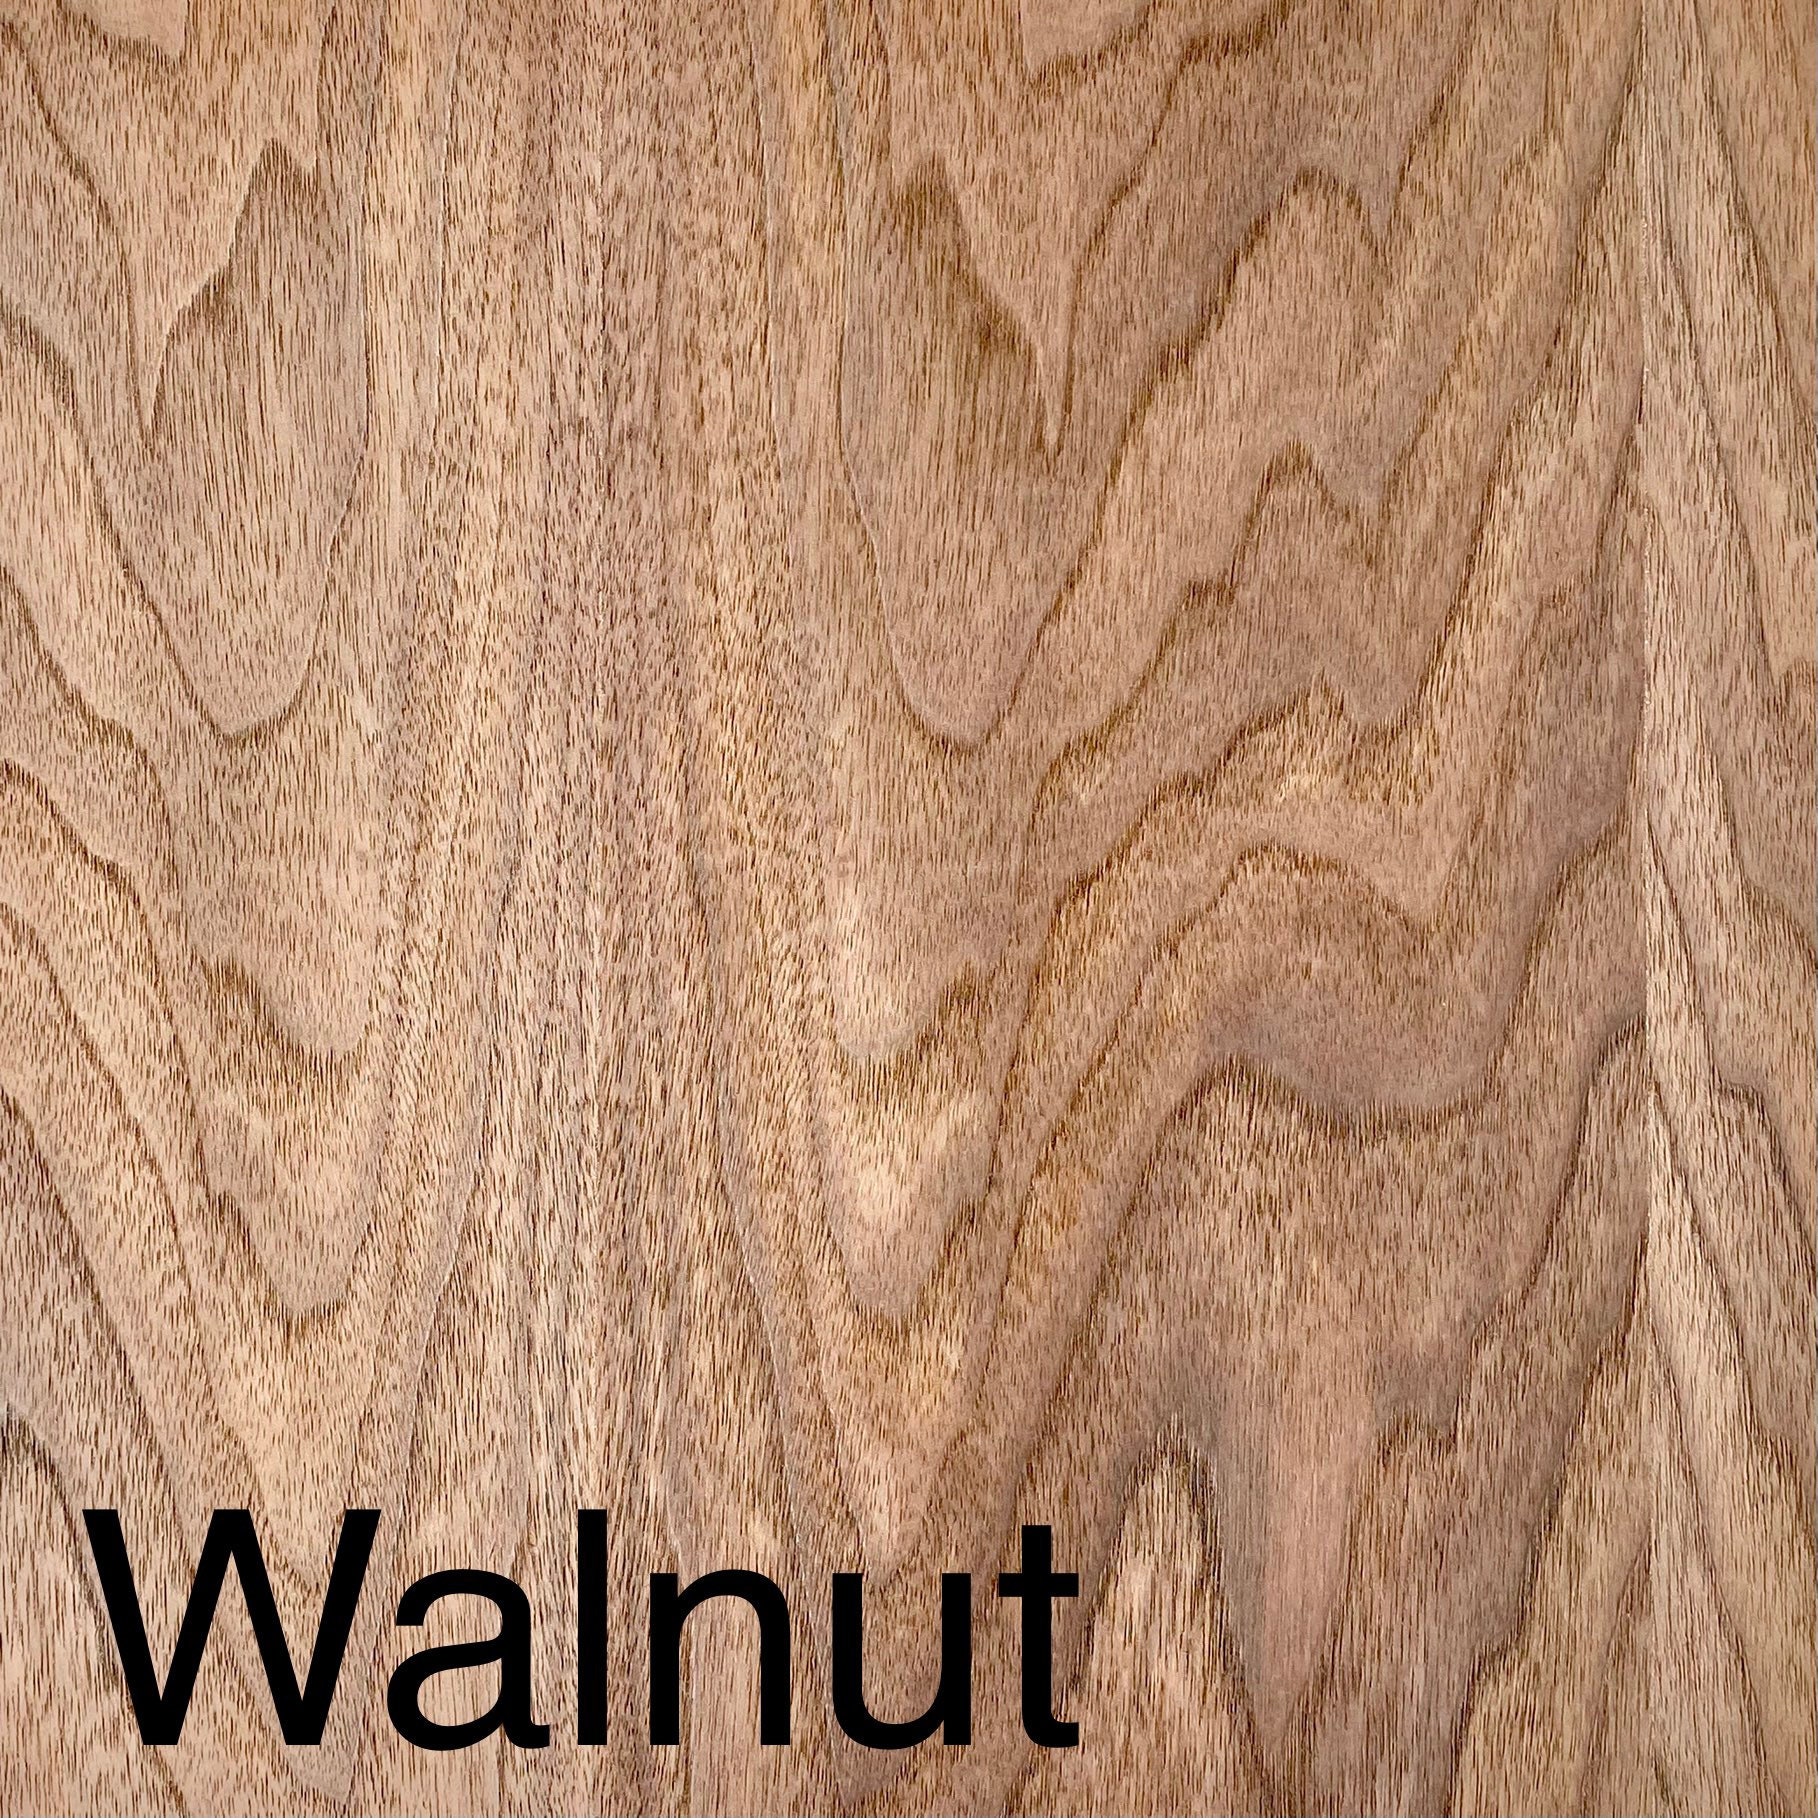 6 sheets of wood veneer - 30.5 x 30.5 Cm Cricut